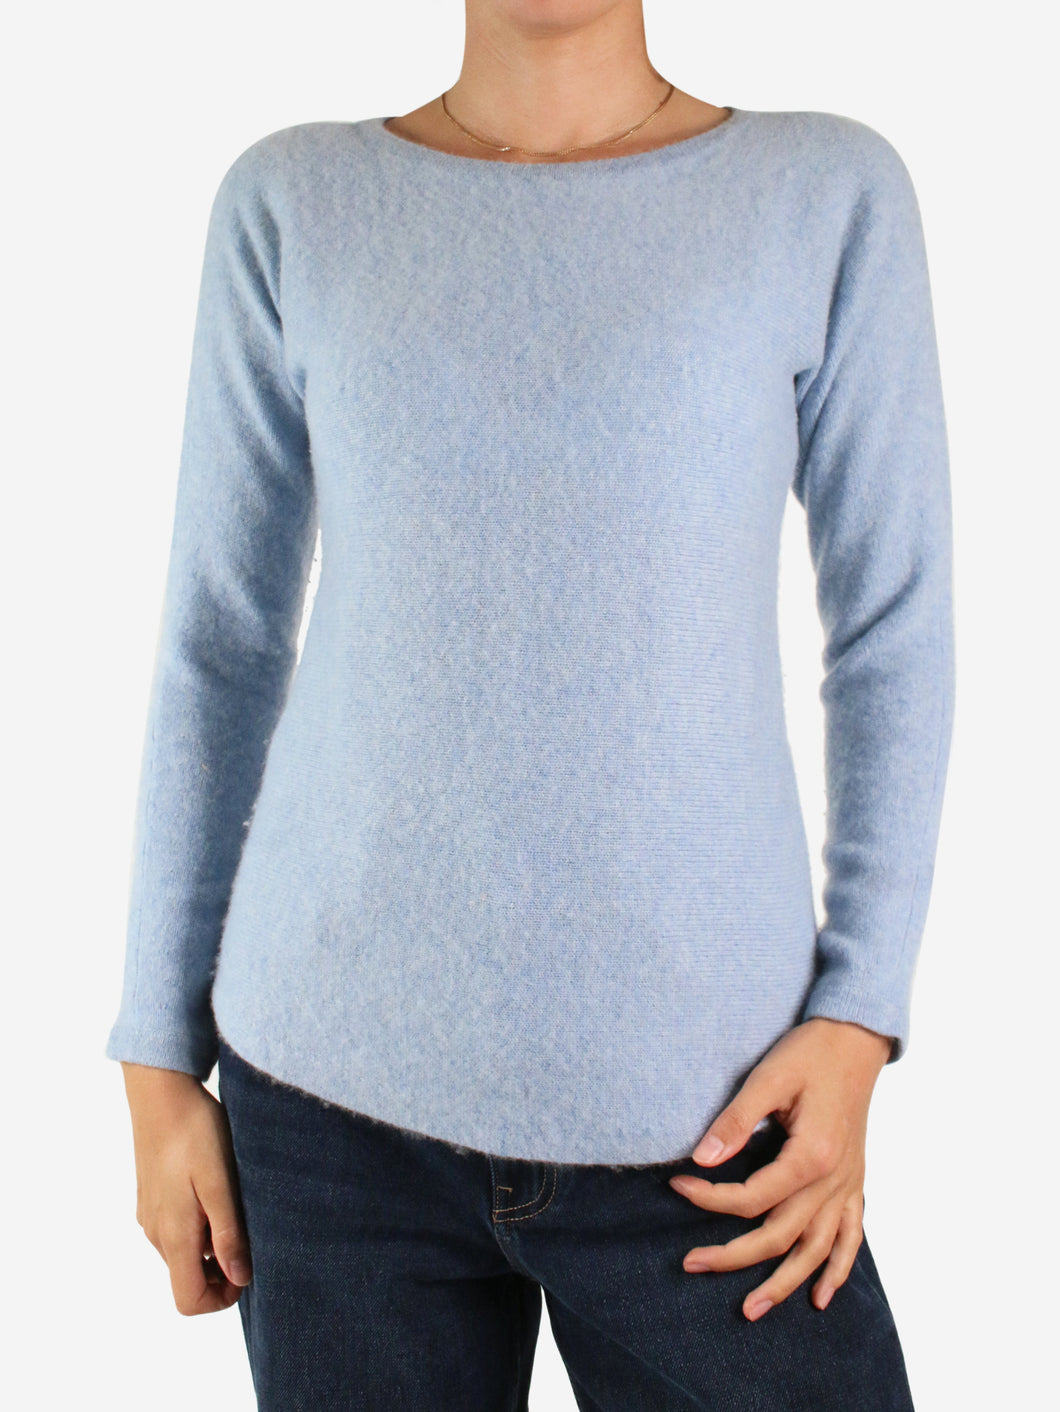 Blue round neck long sleeved jumper - size S Knitwear Weekend Max Mara 